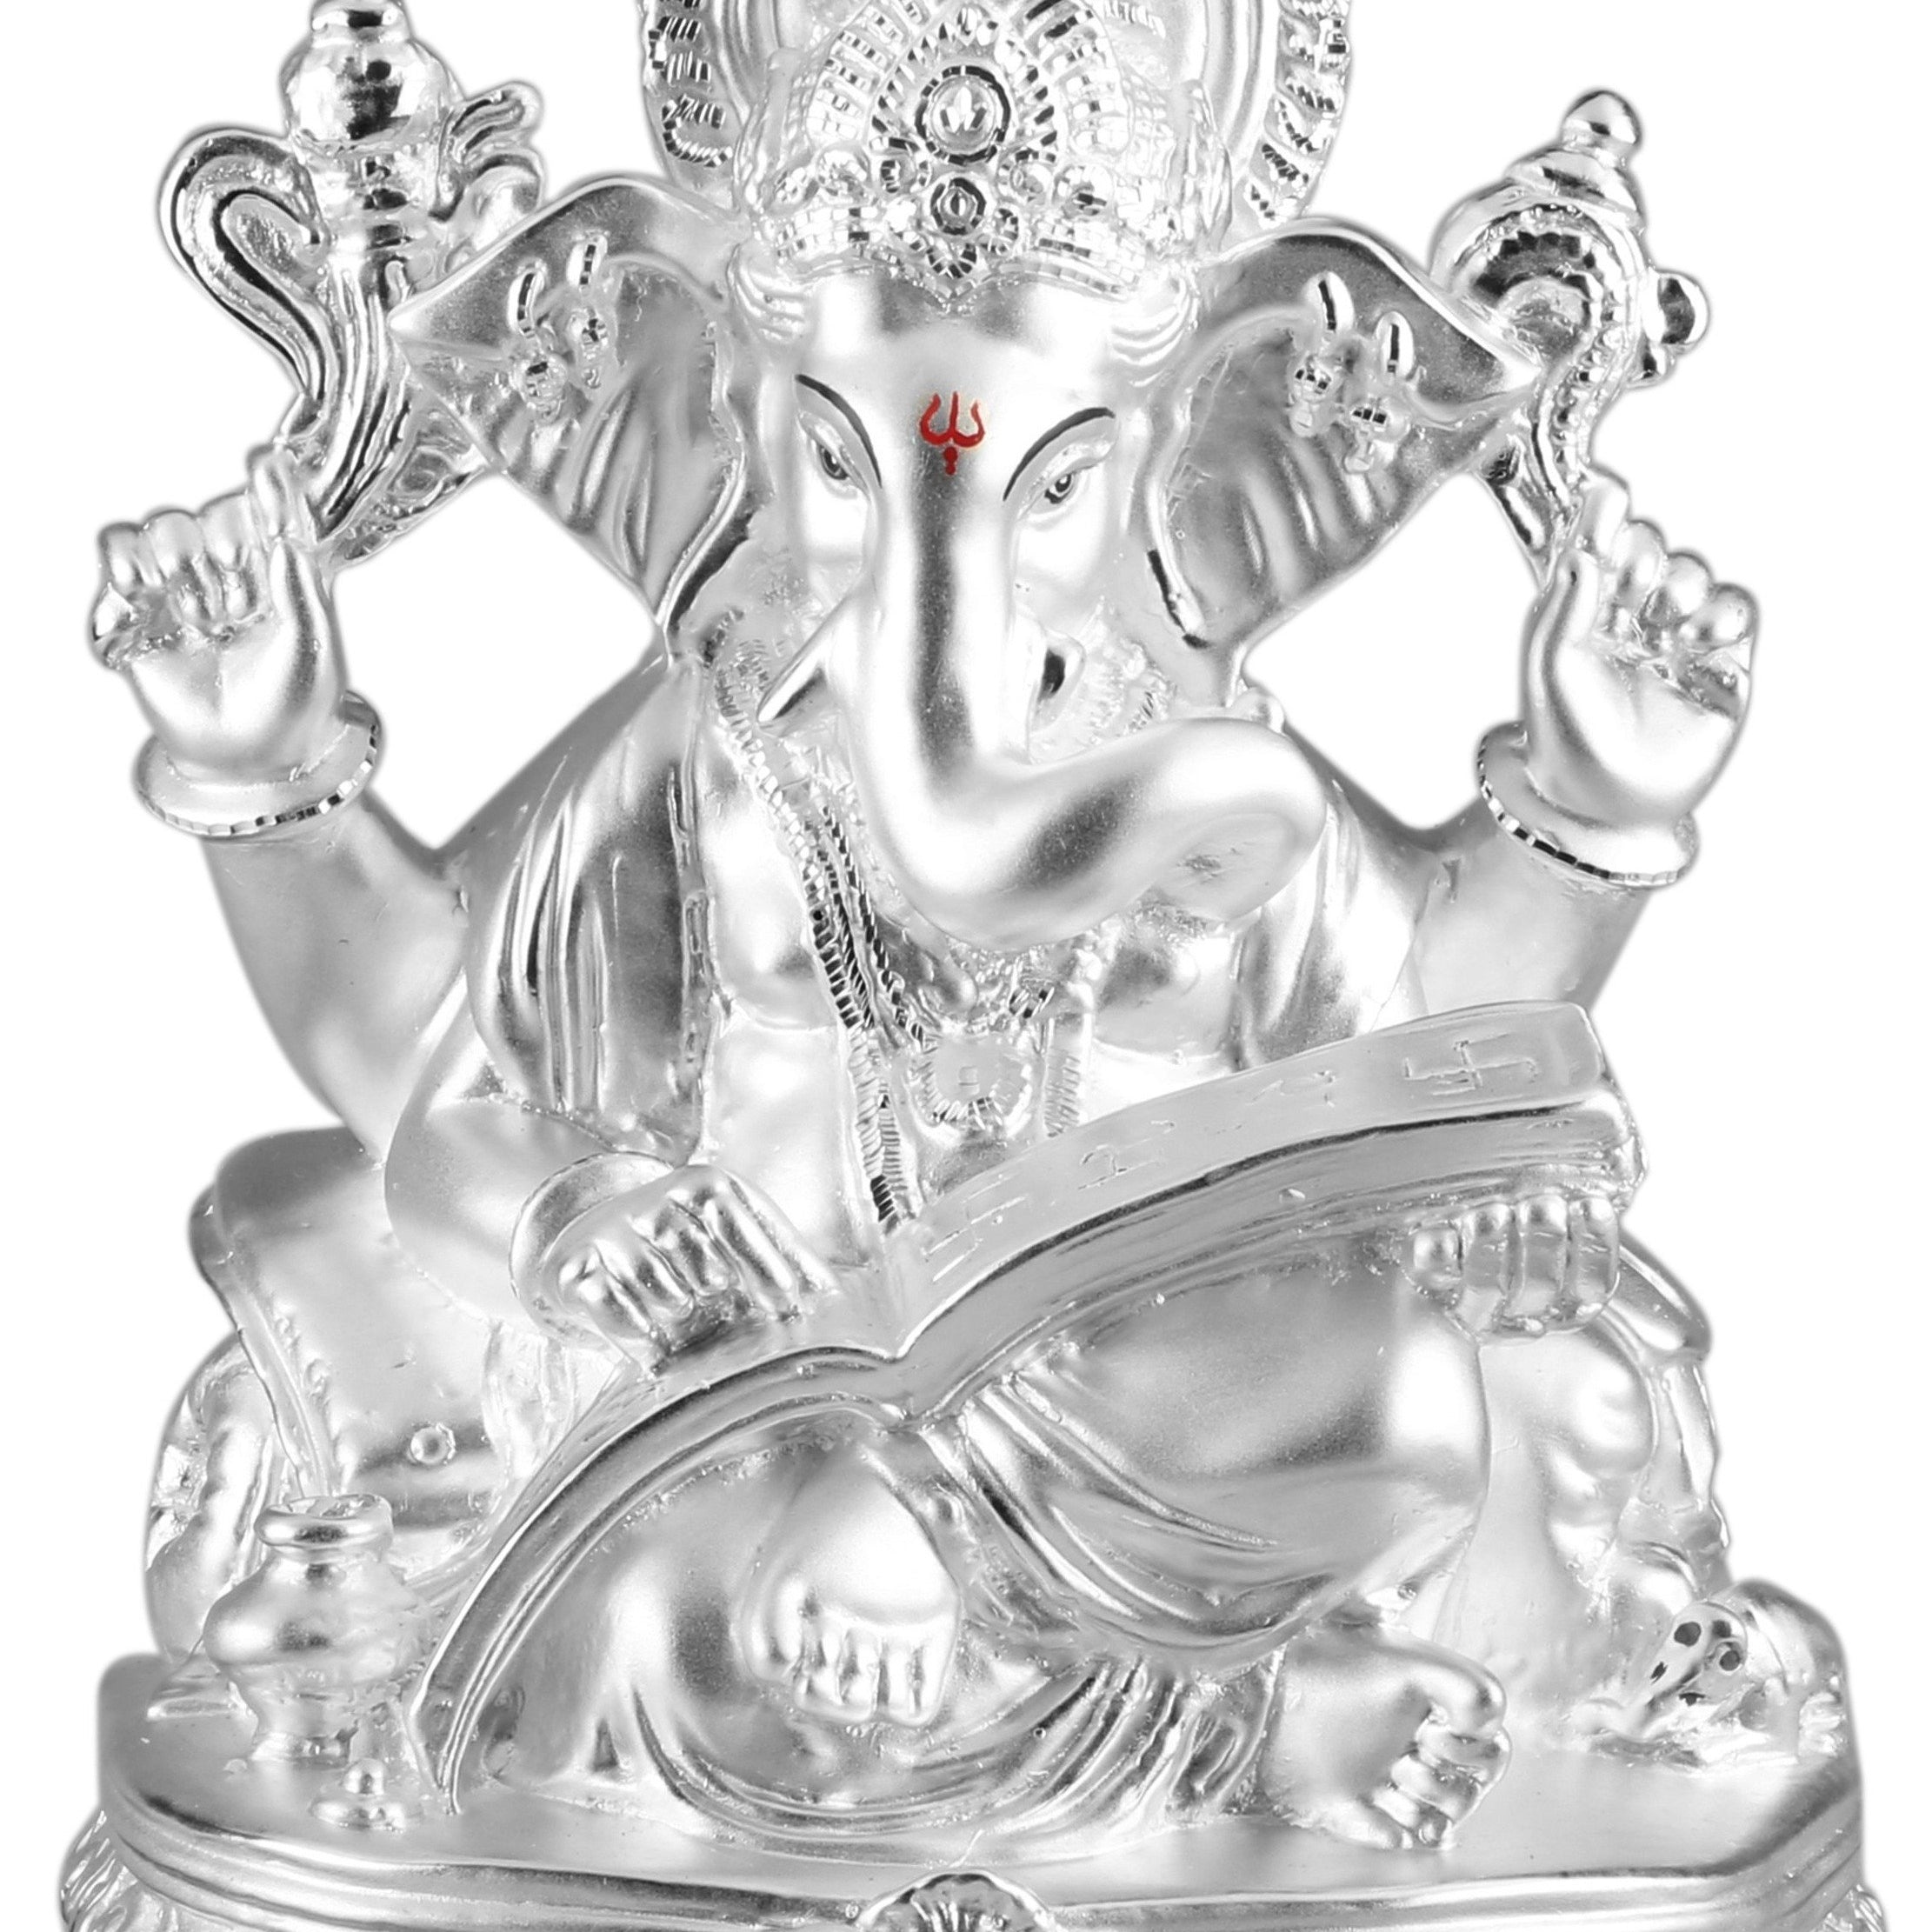 999 Pure Silver Ganesha Idol By Krysaliis Isvara - Krign41 Idols